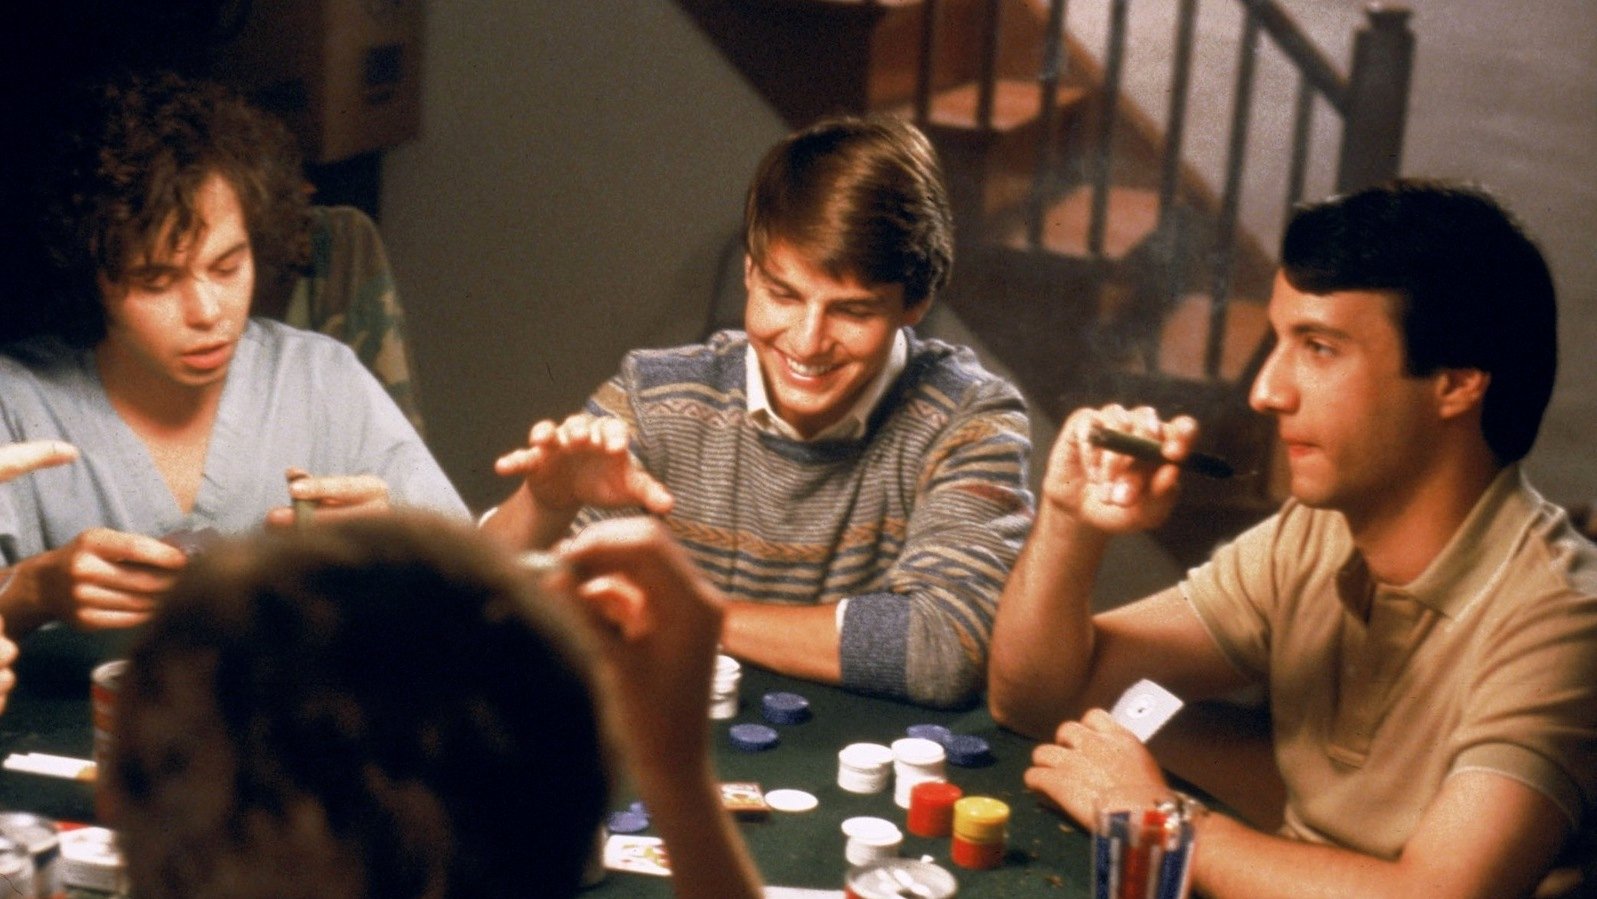 A group of teenage boys play poker and smile, having fun.